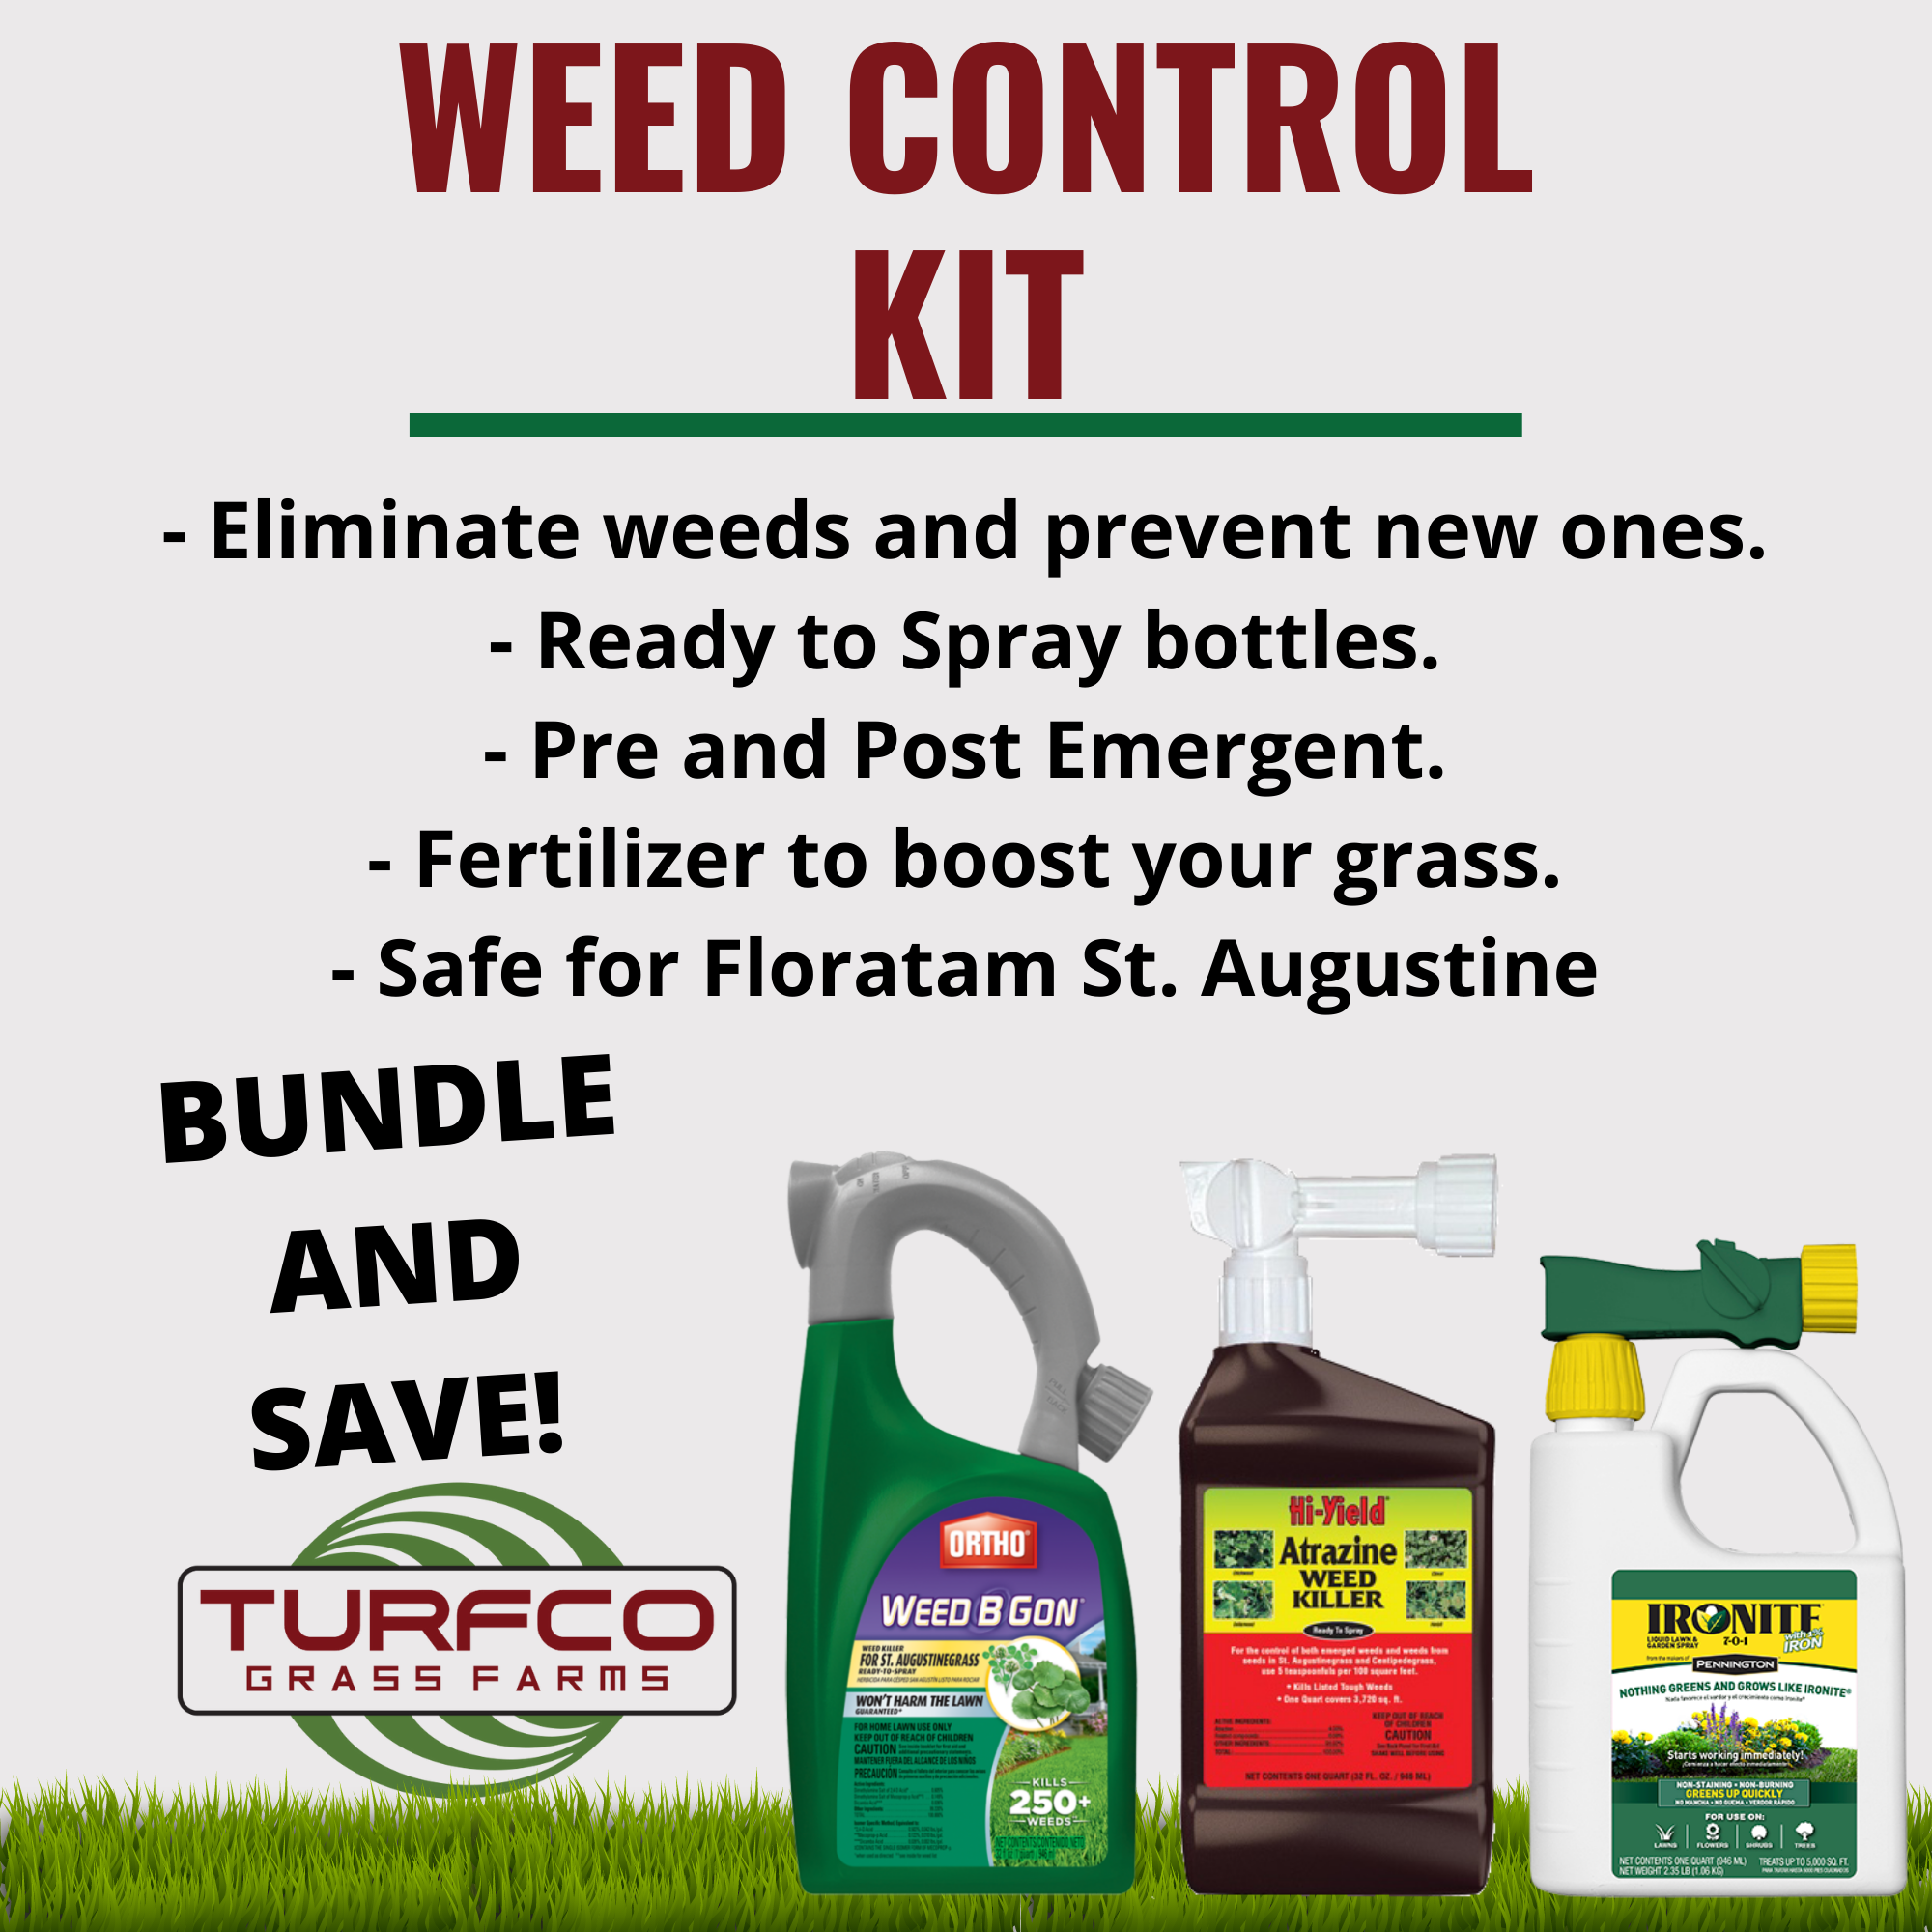 Turfco's Weed Control Kit